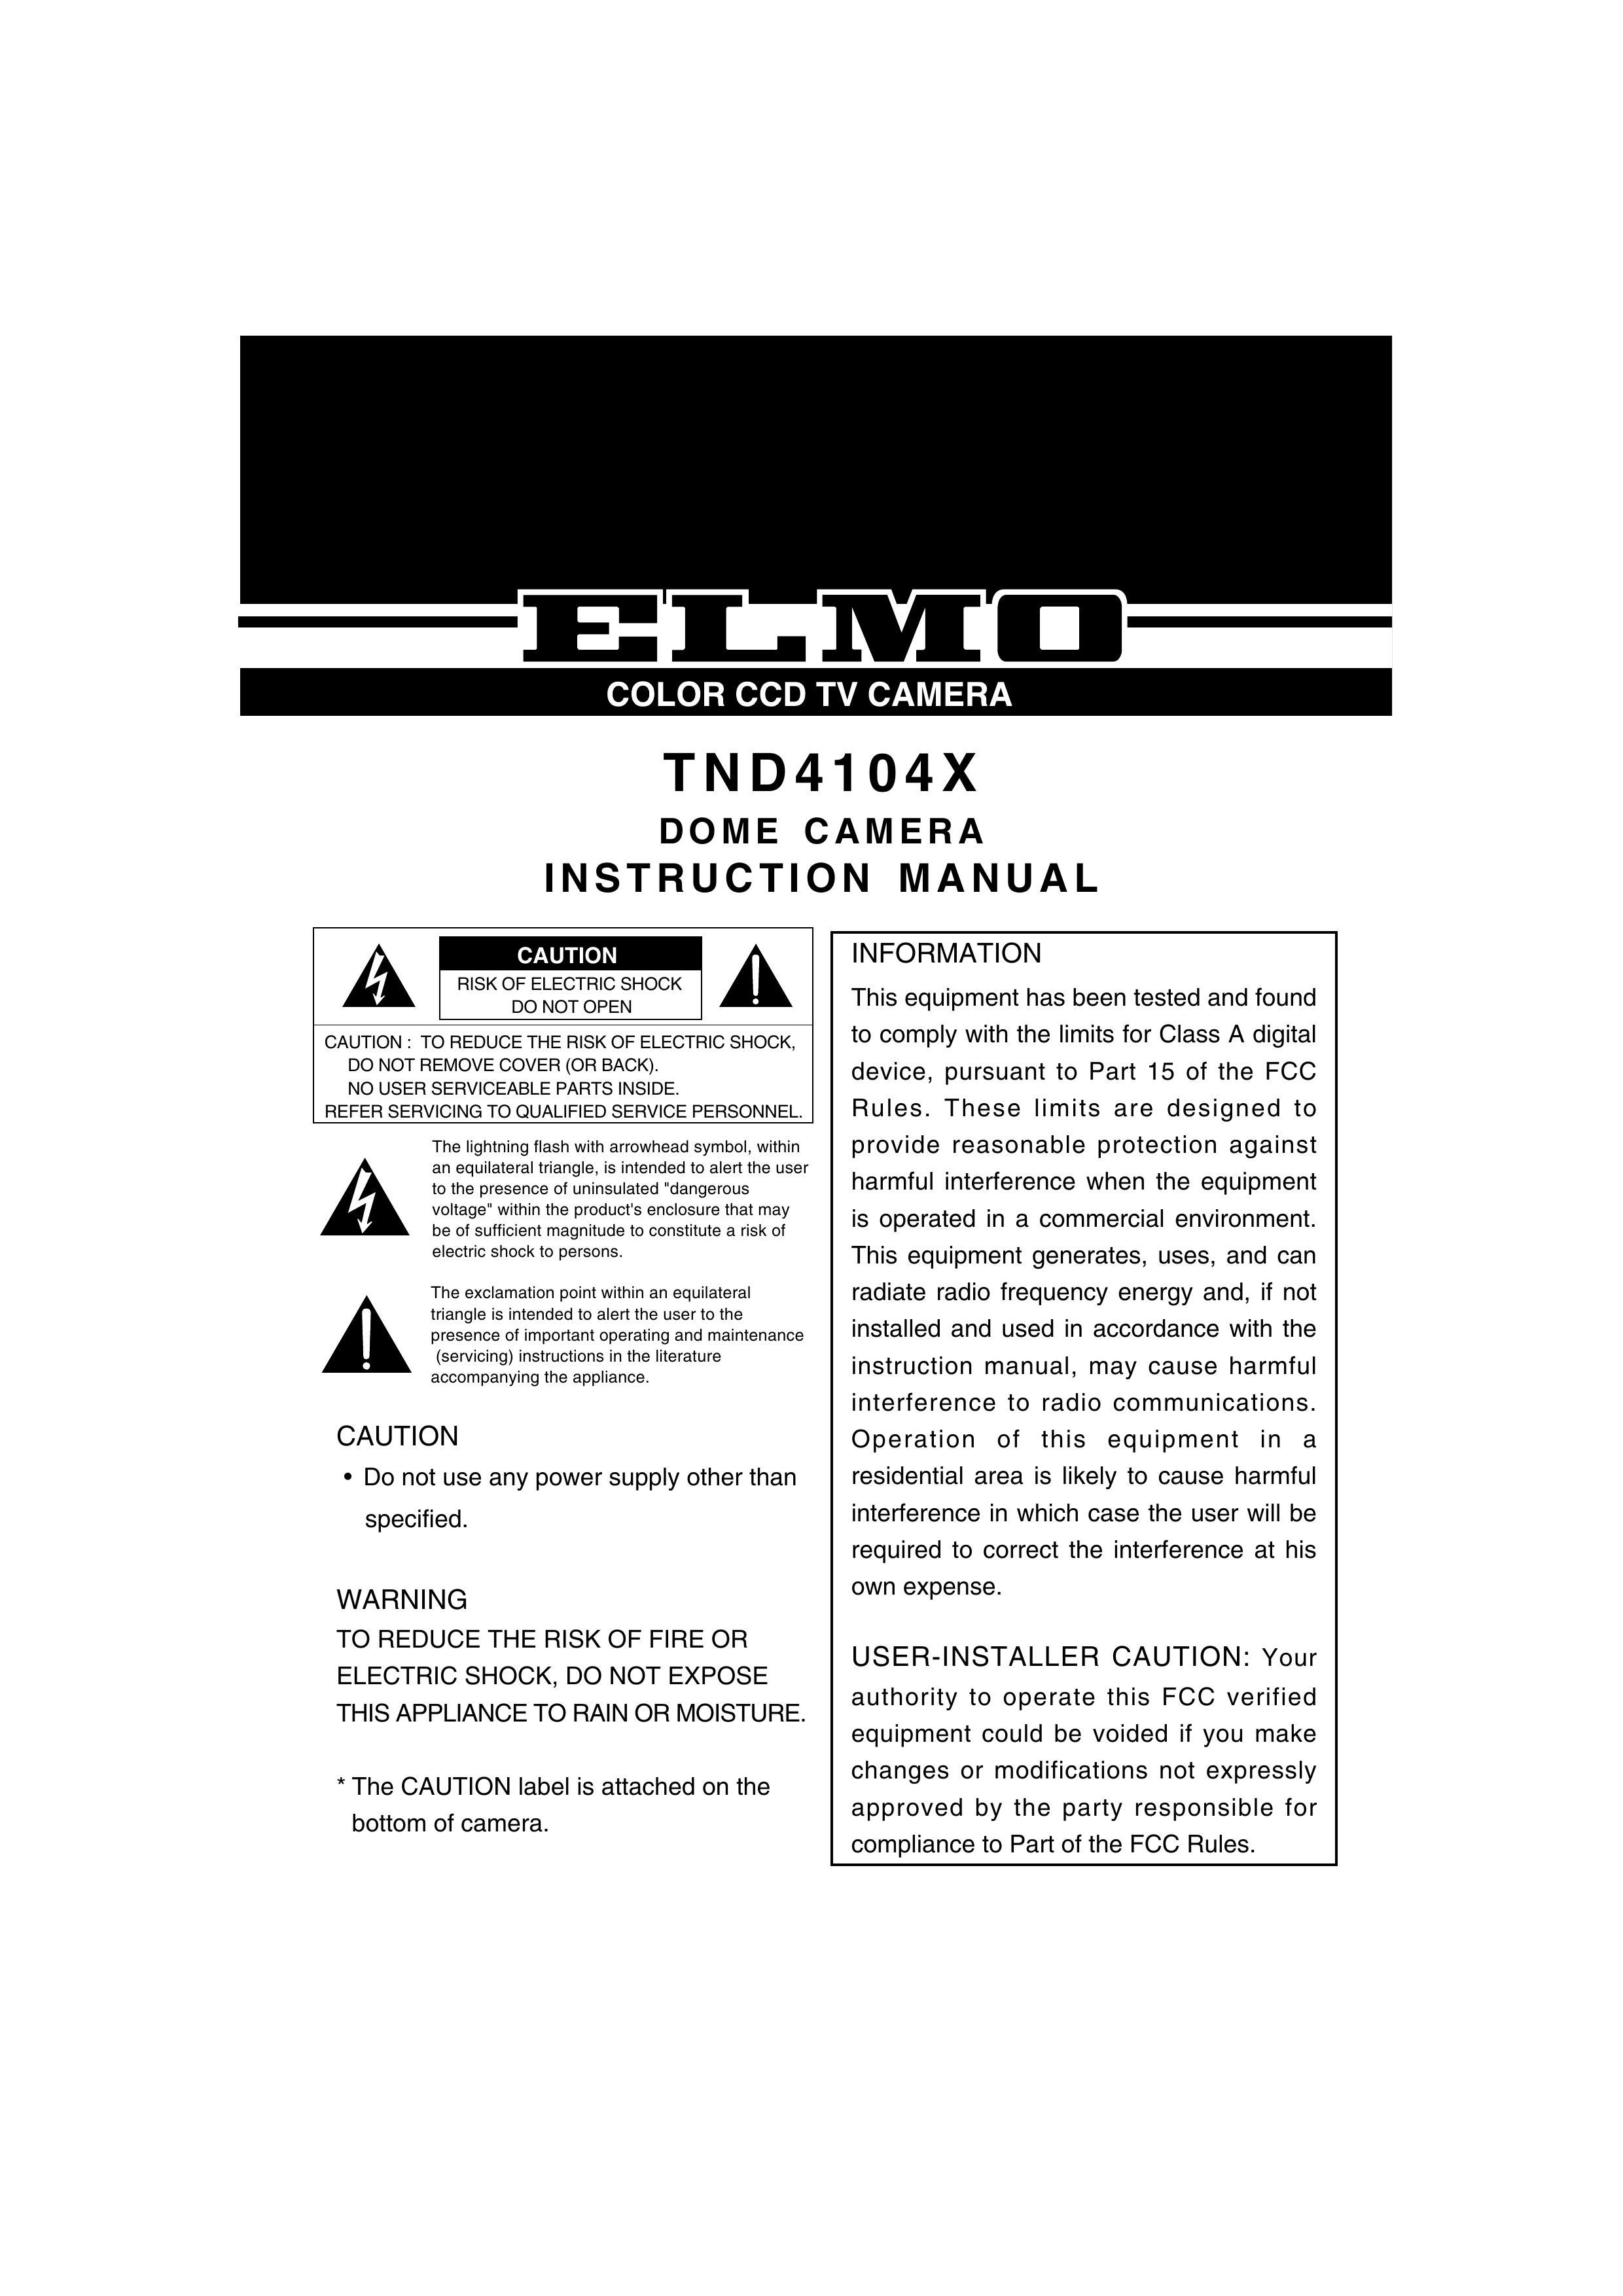 Elmo TND4104X Security Camera User Manual